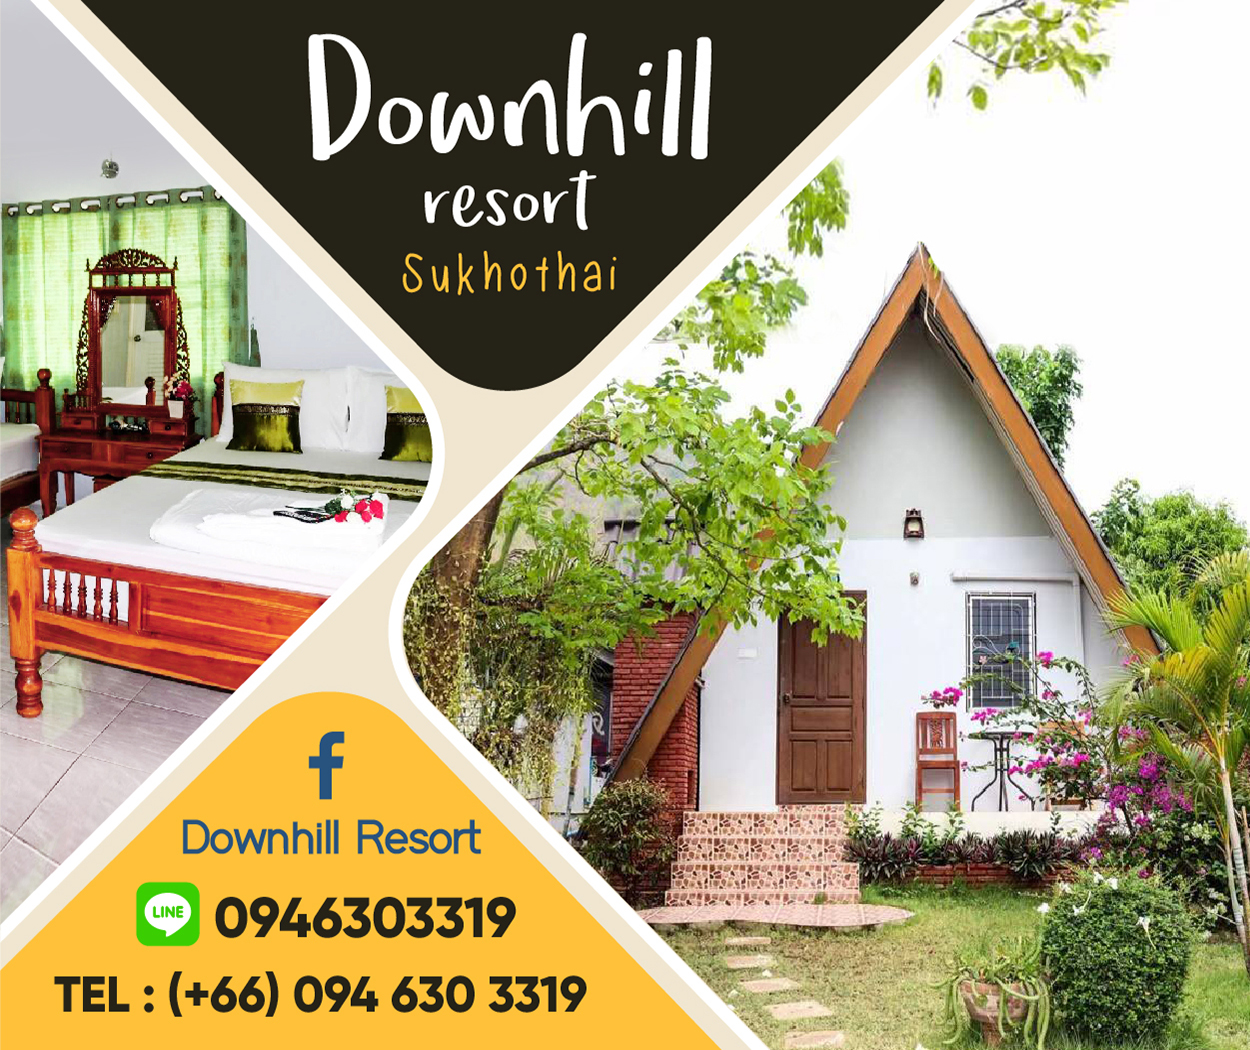 Downhill Resort